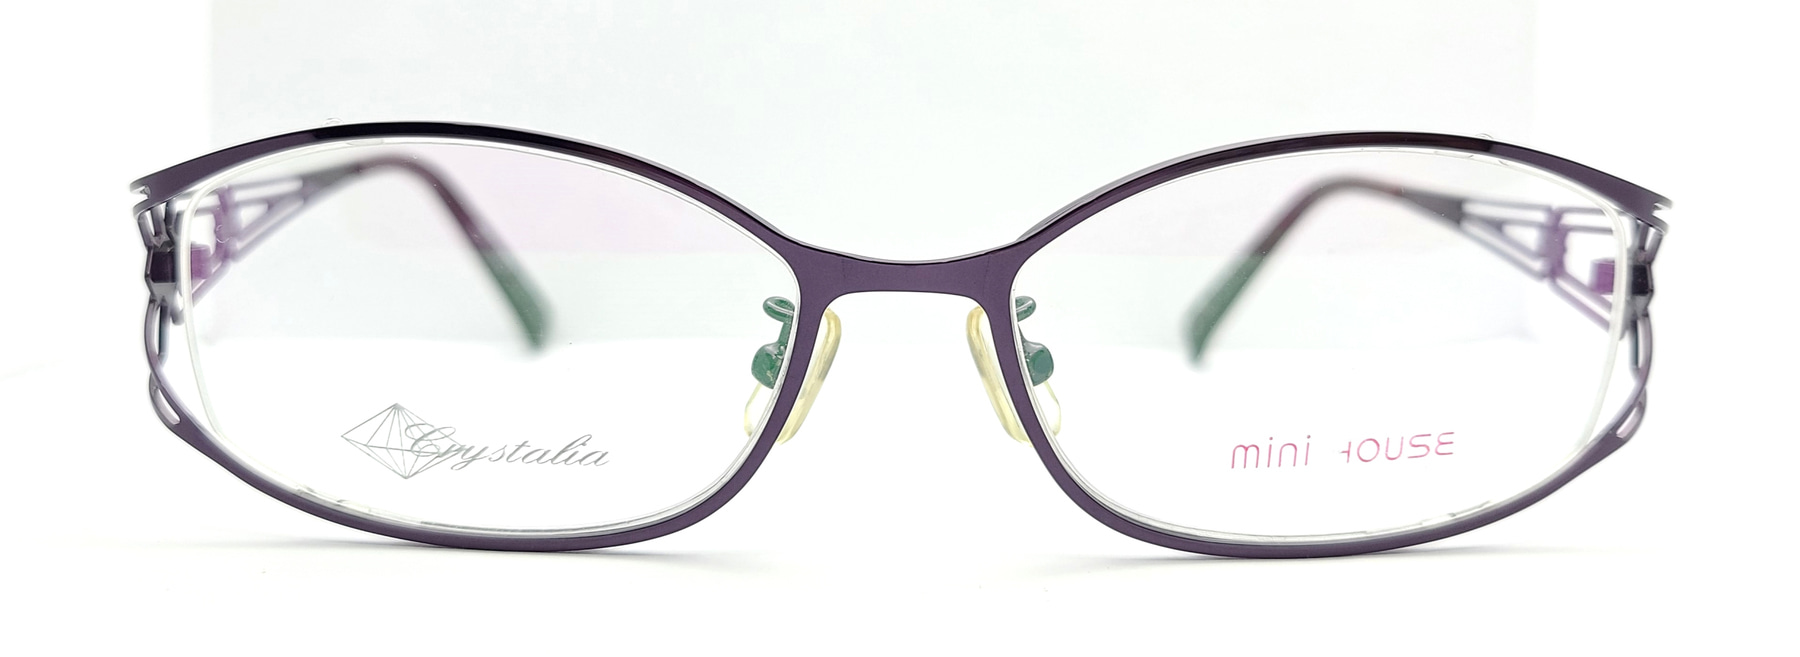 MINIHOUSE M-1035, Korean glasses, sunglasses, eyeglasses, glasses